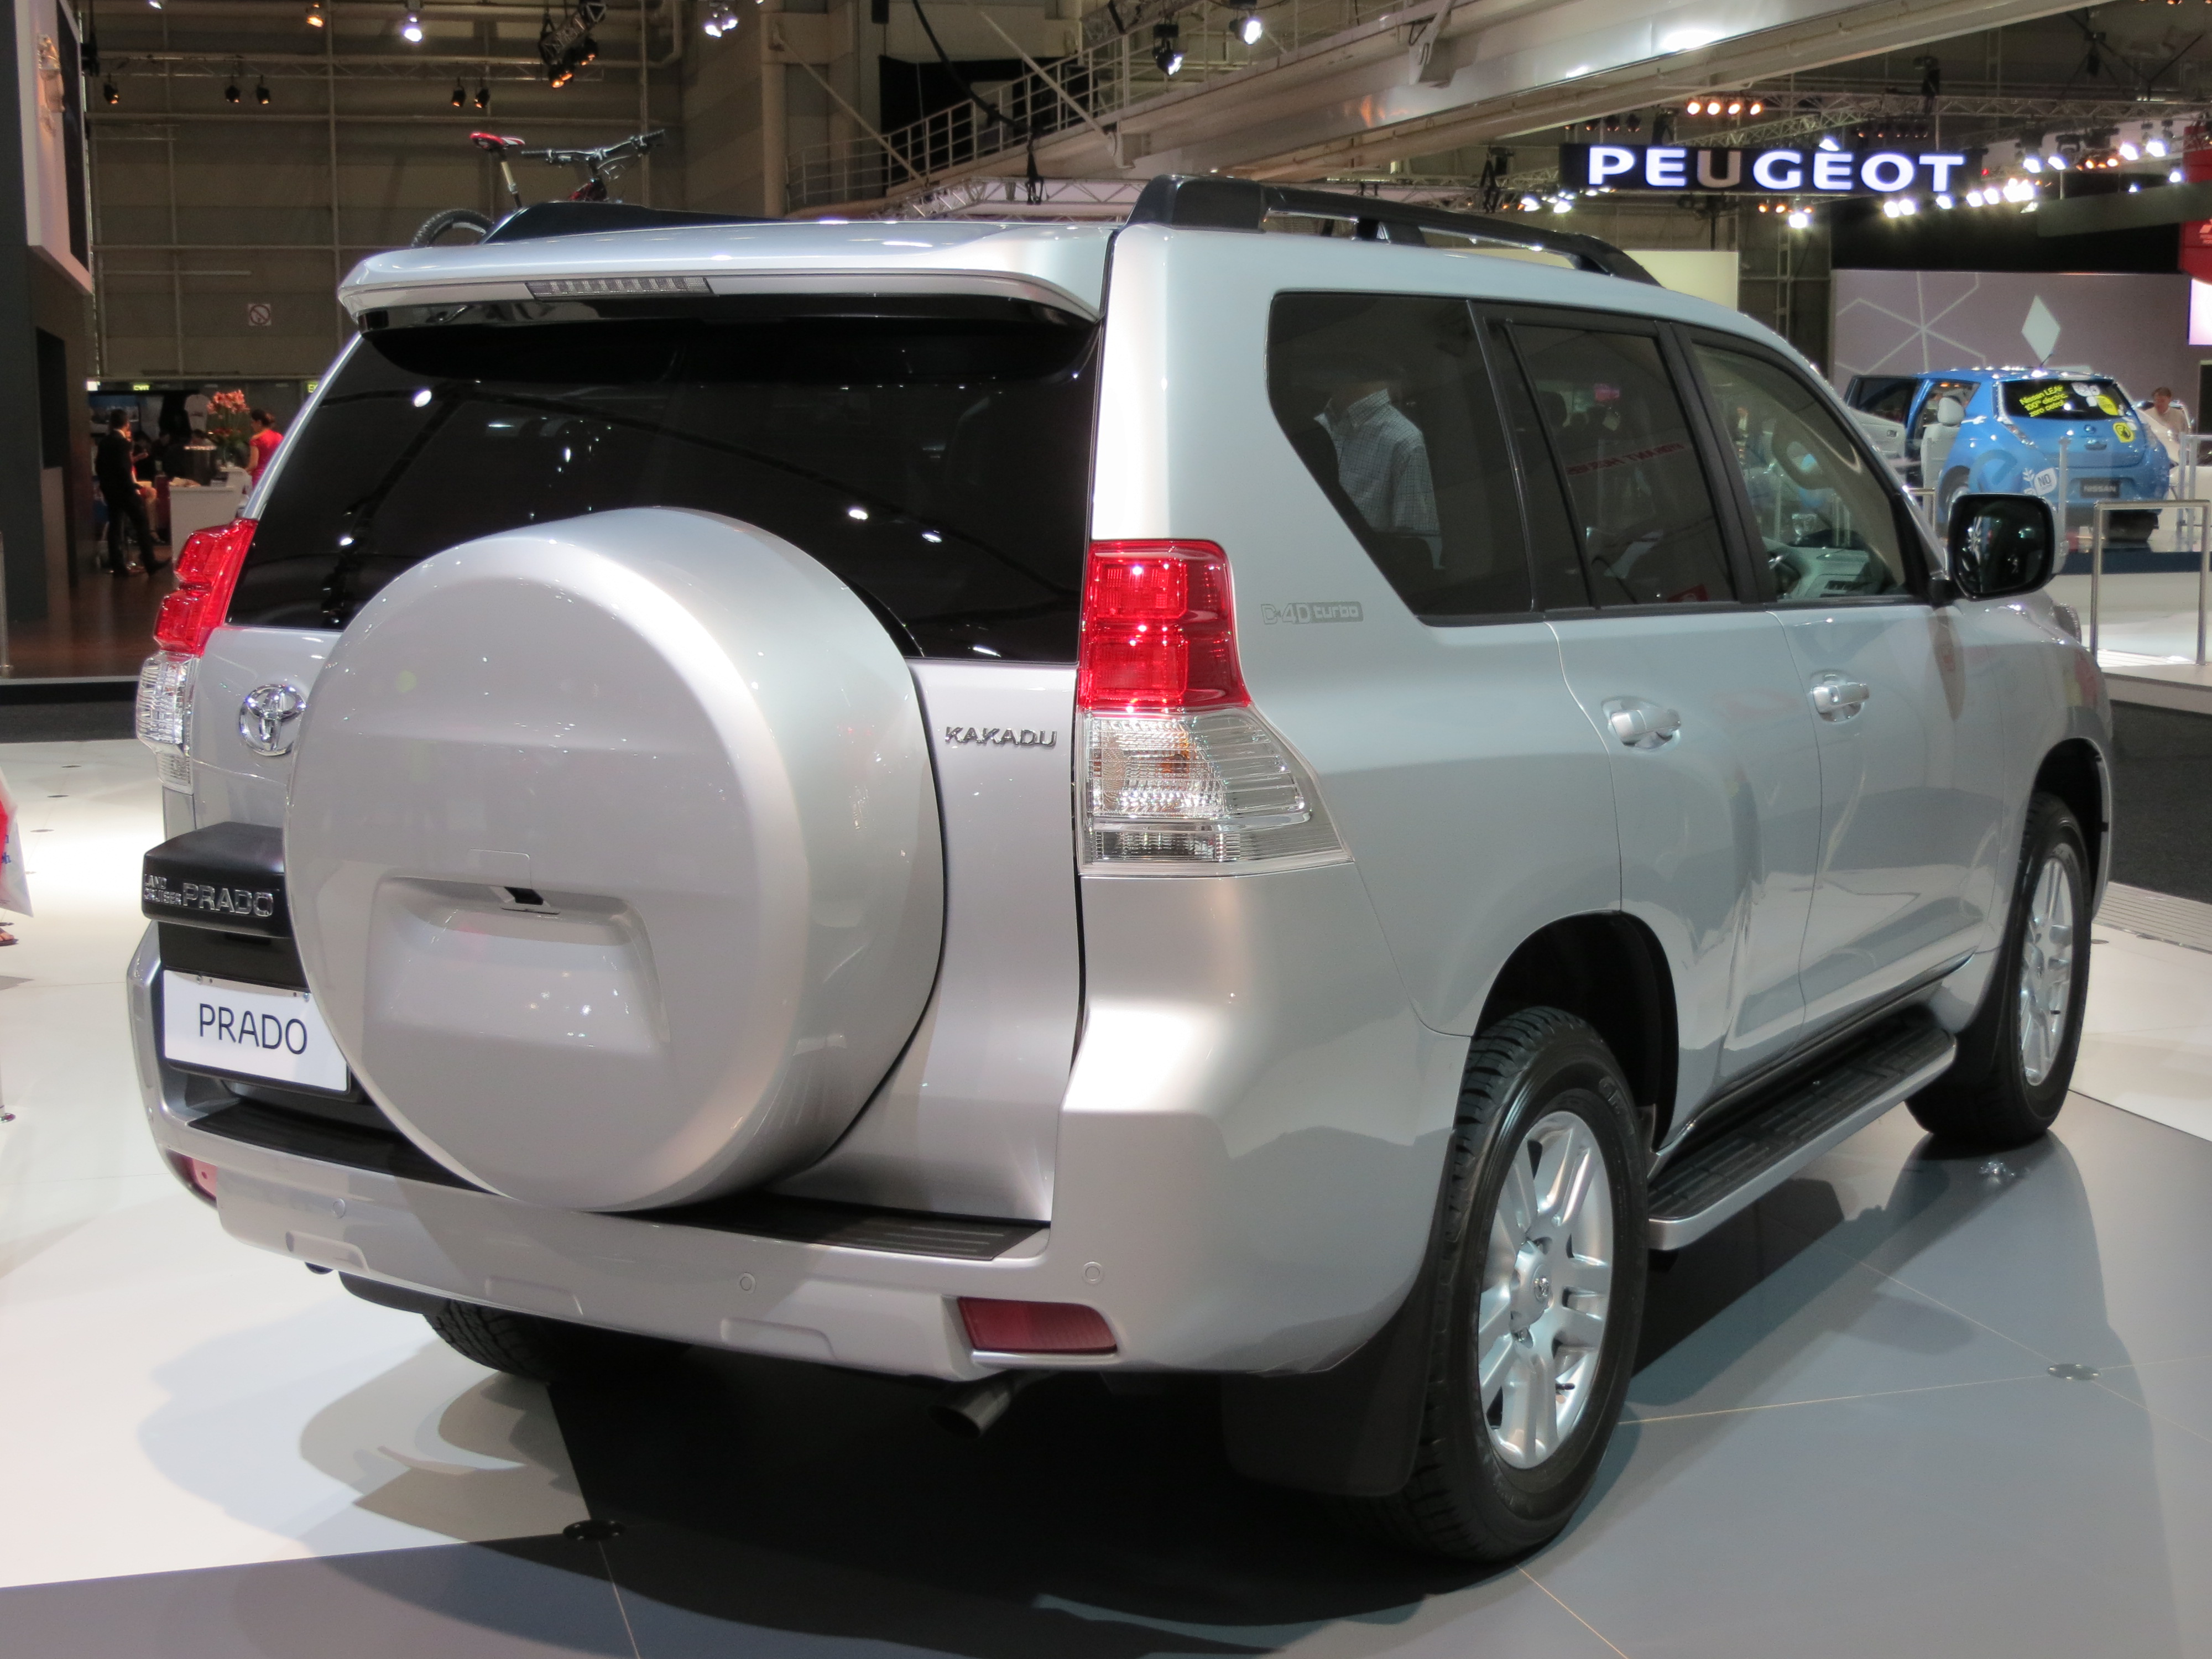 Toyota Land Cruiser Prado 150 interior specifications